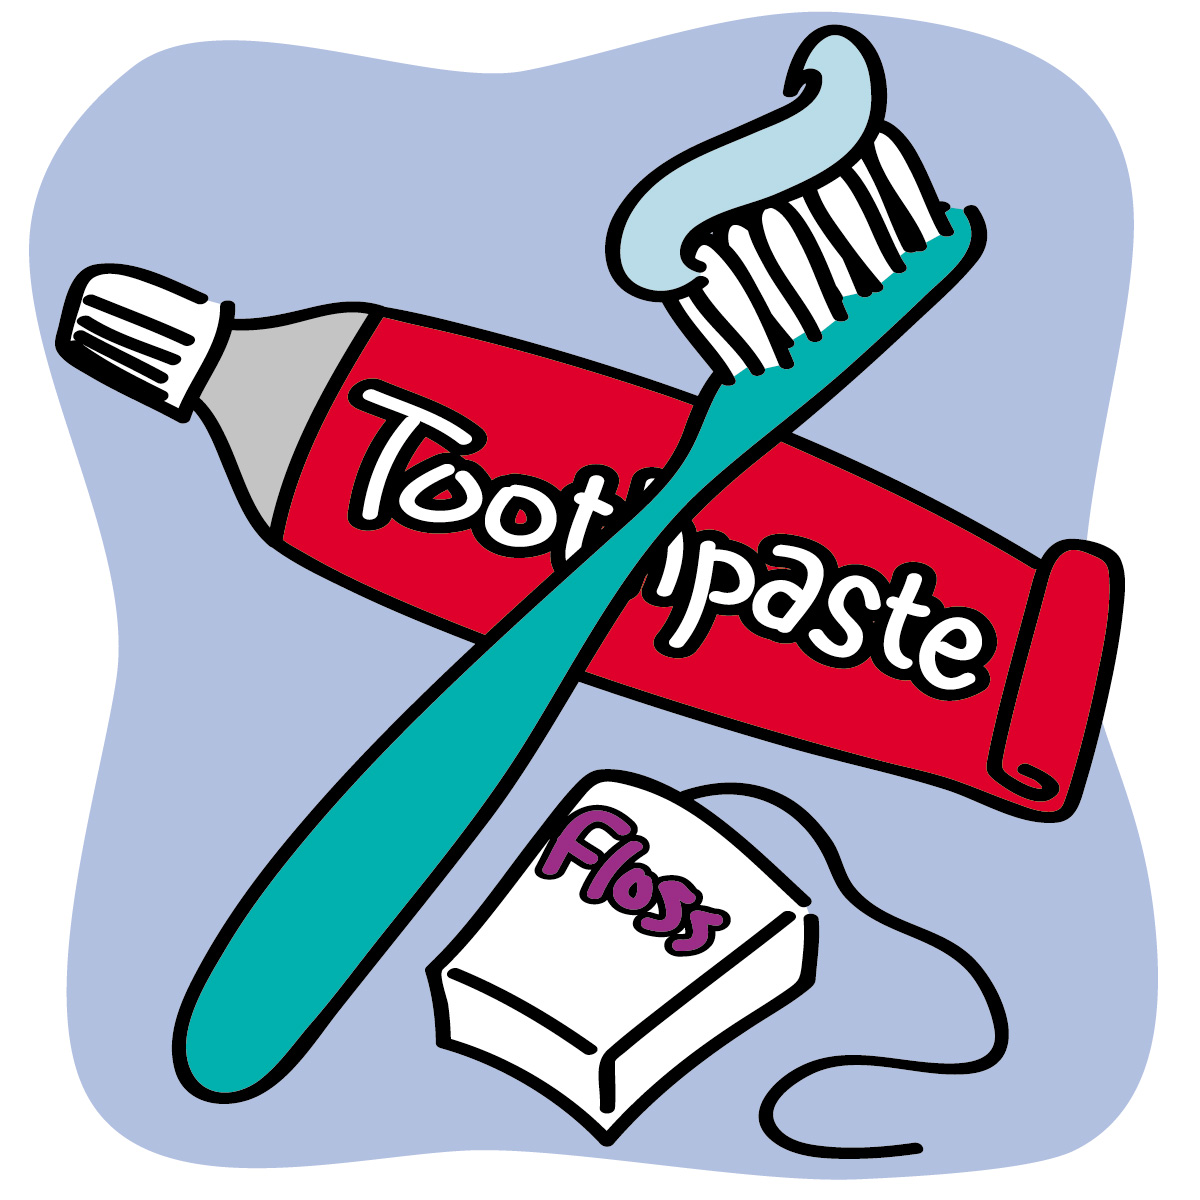 Brush teeth animated brushing teeth clip art danasrgd top image 